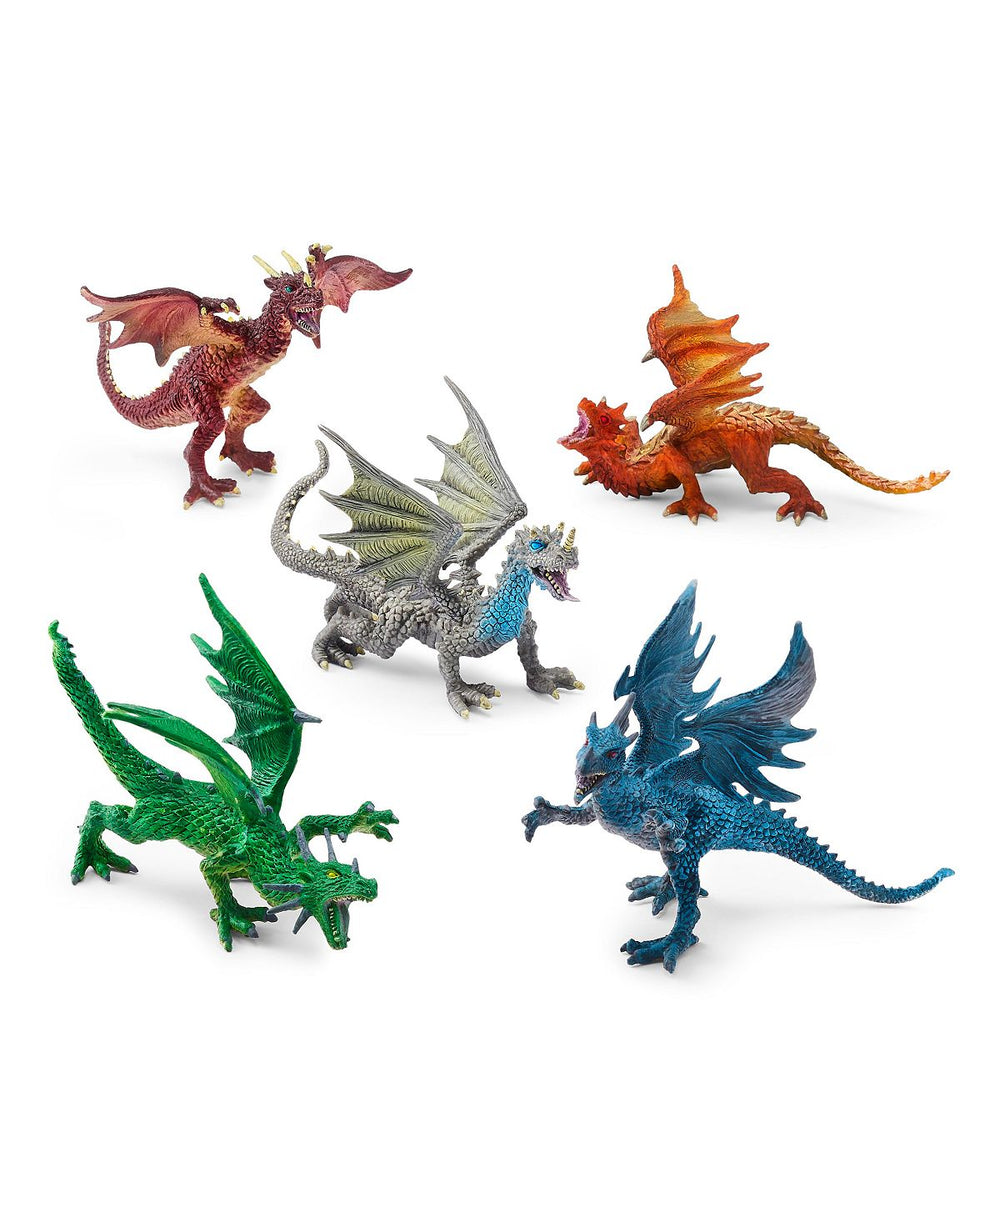 Toys R Us Exclusive Dragon Collectibles Set - 5 Unique Hand-Painted Figures